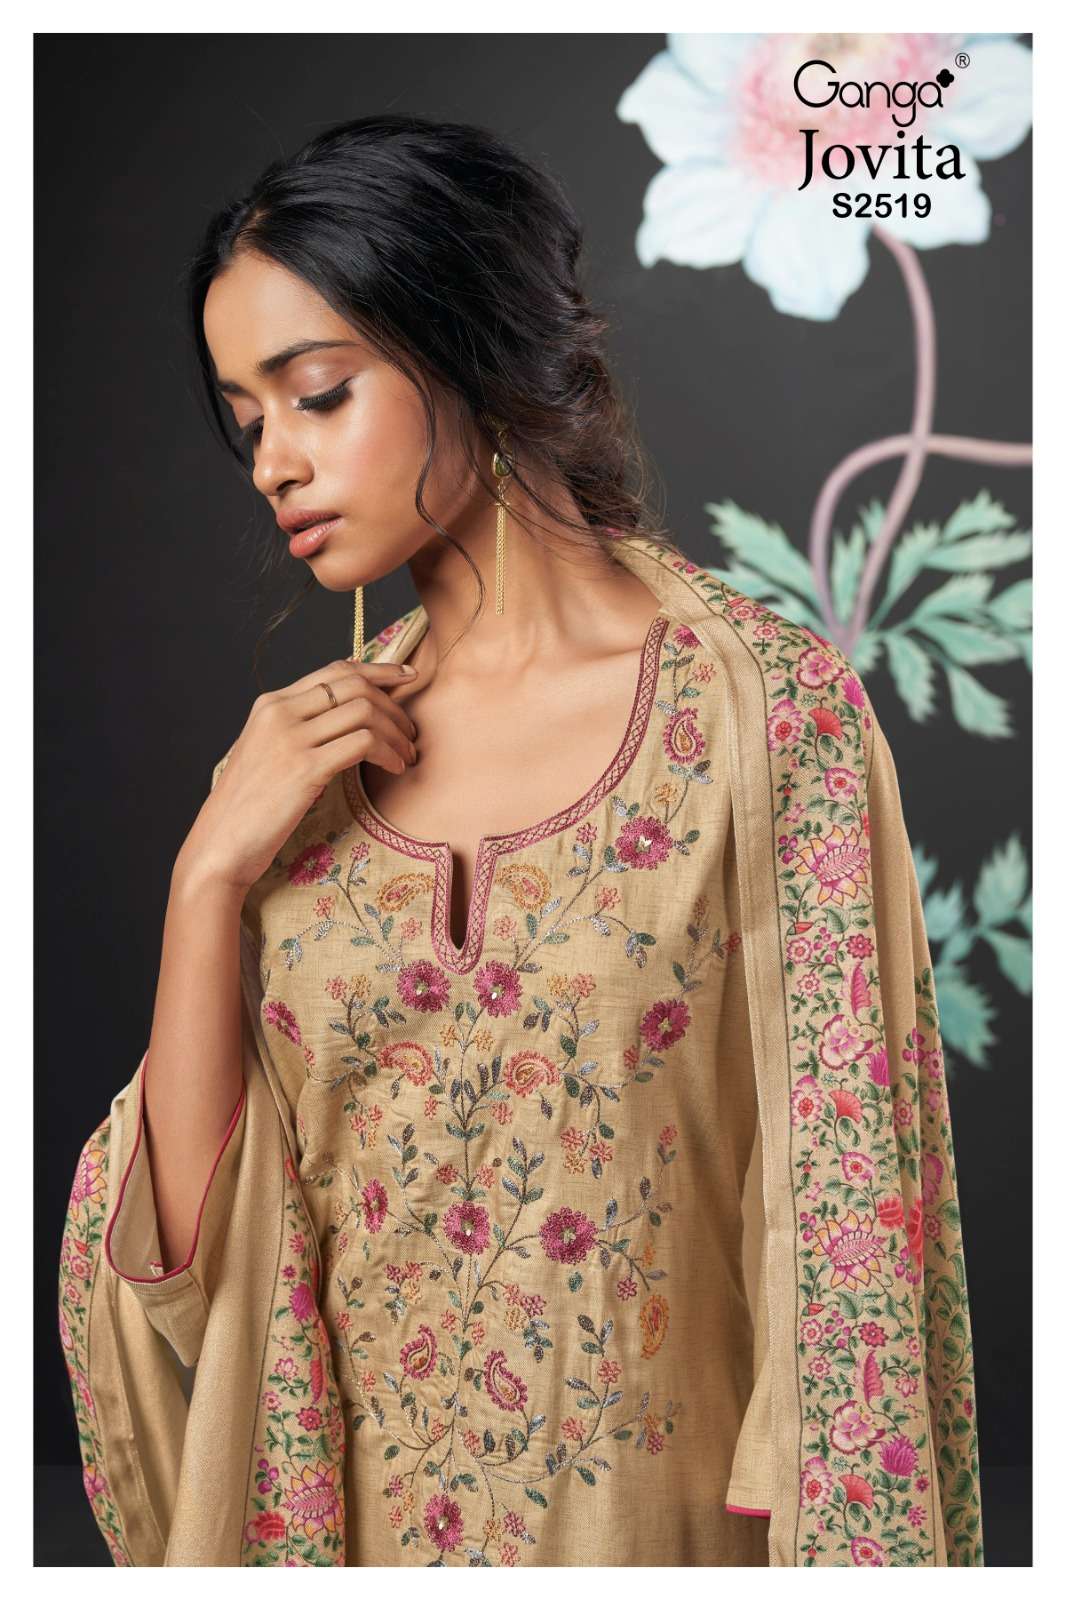 Ganga Jovita 2519 Ladies Wear Designer Cotton Suit New Collection